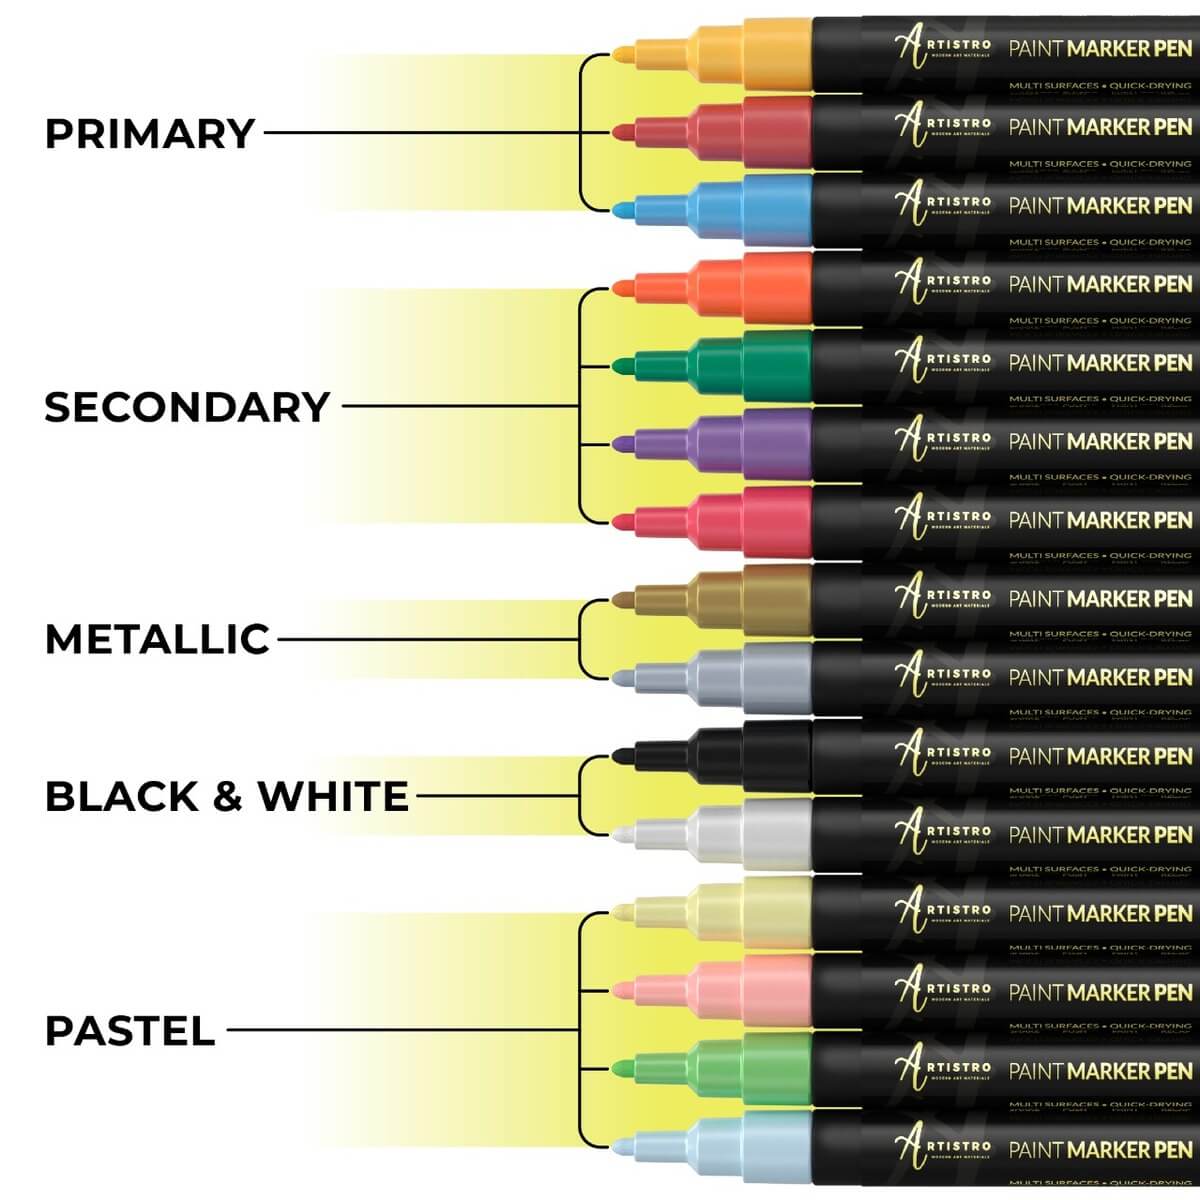 15 colored primary, secondary, metallic, black & white, pastel